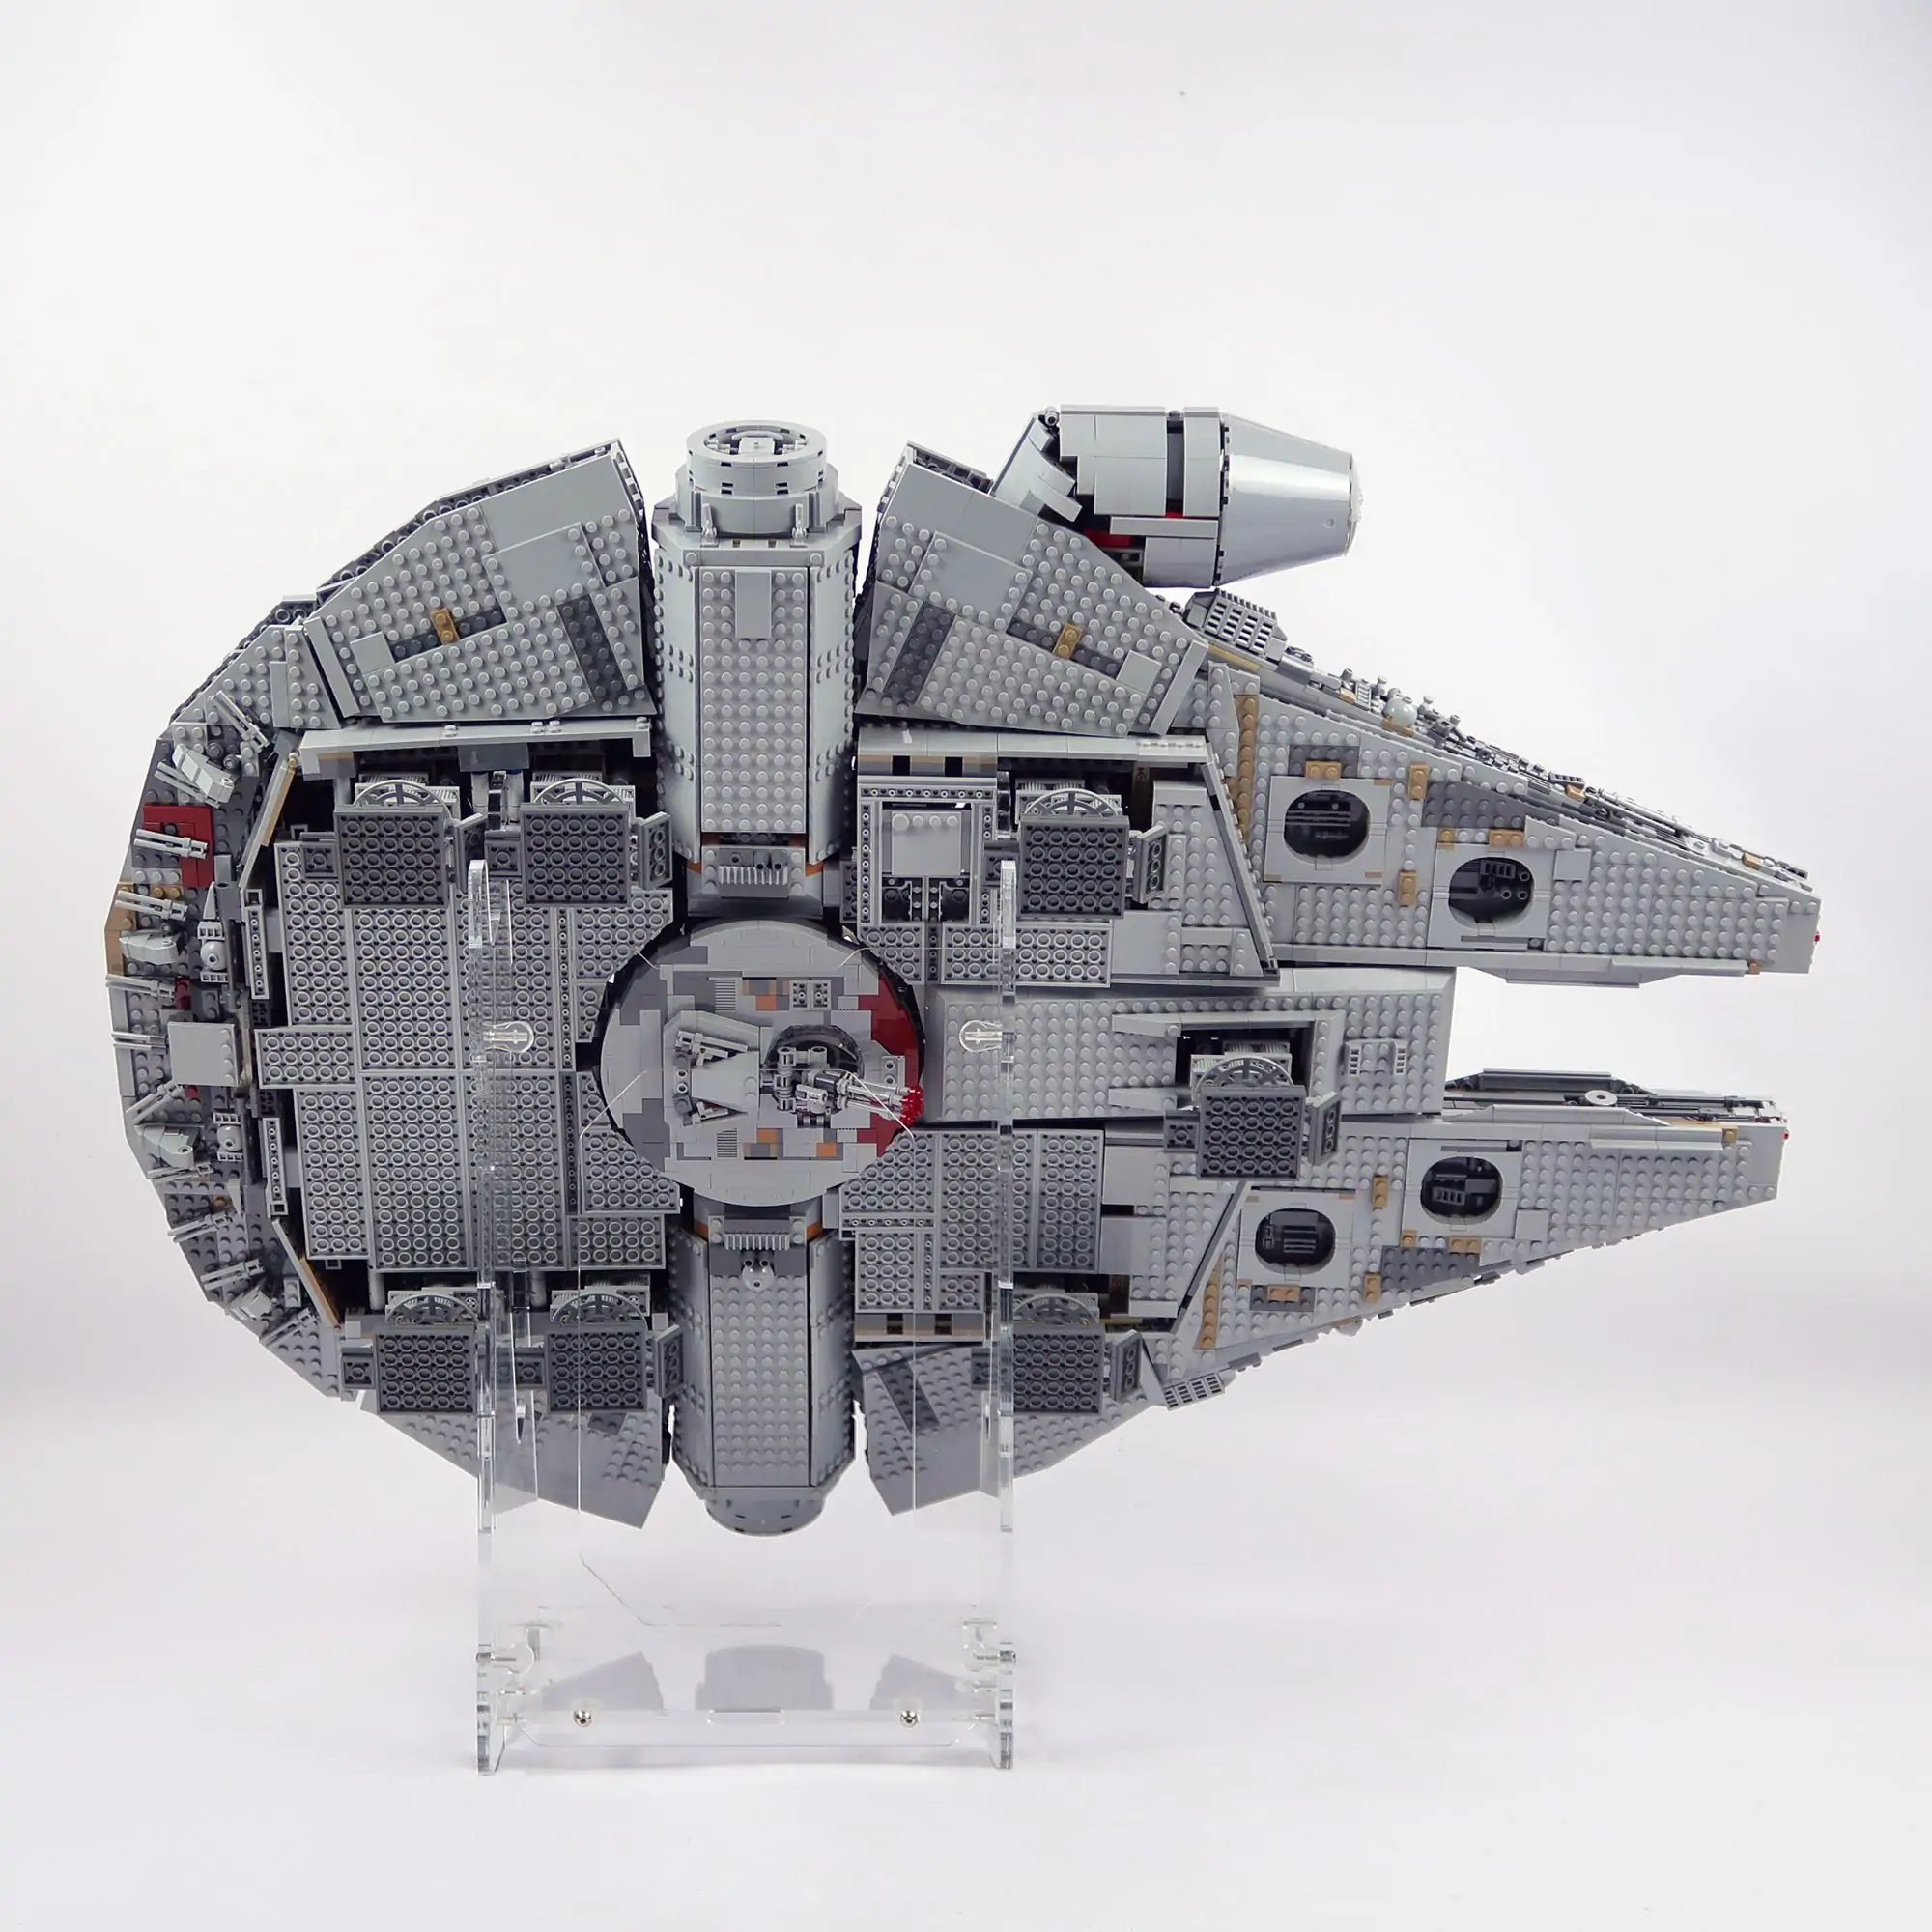 2-inch 1 LEGO Star Wars Millennium Falcon Stand Kit 75105/75257£CP2633